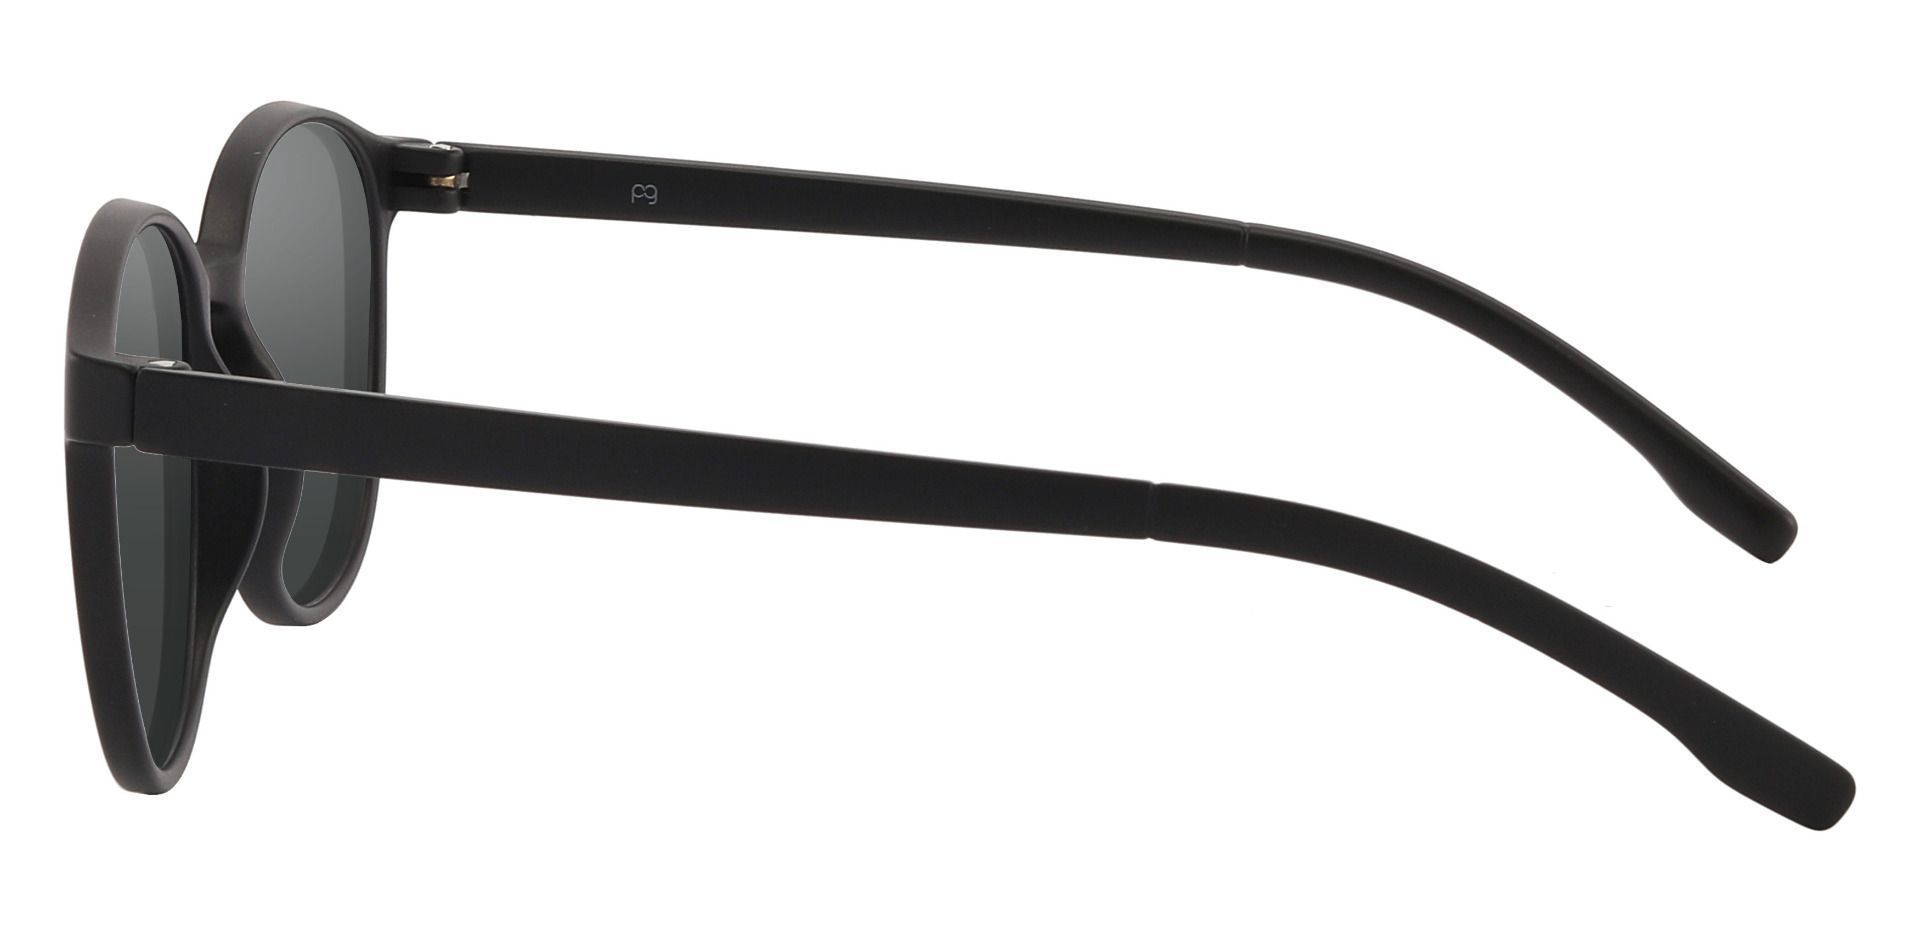 Molasses Oval Prescription Sunglasses - Black Frame With Gray Lenses